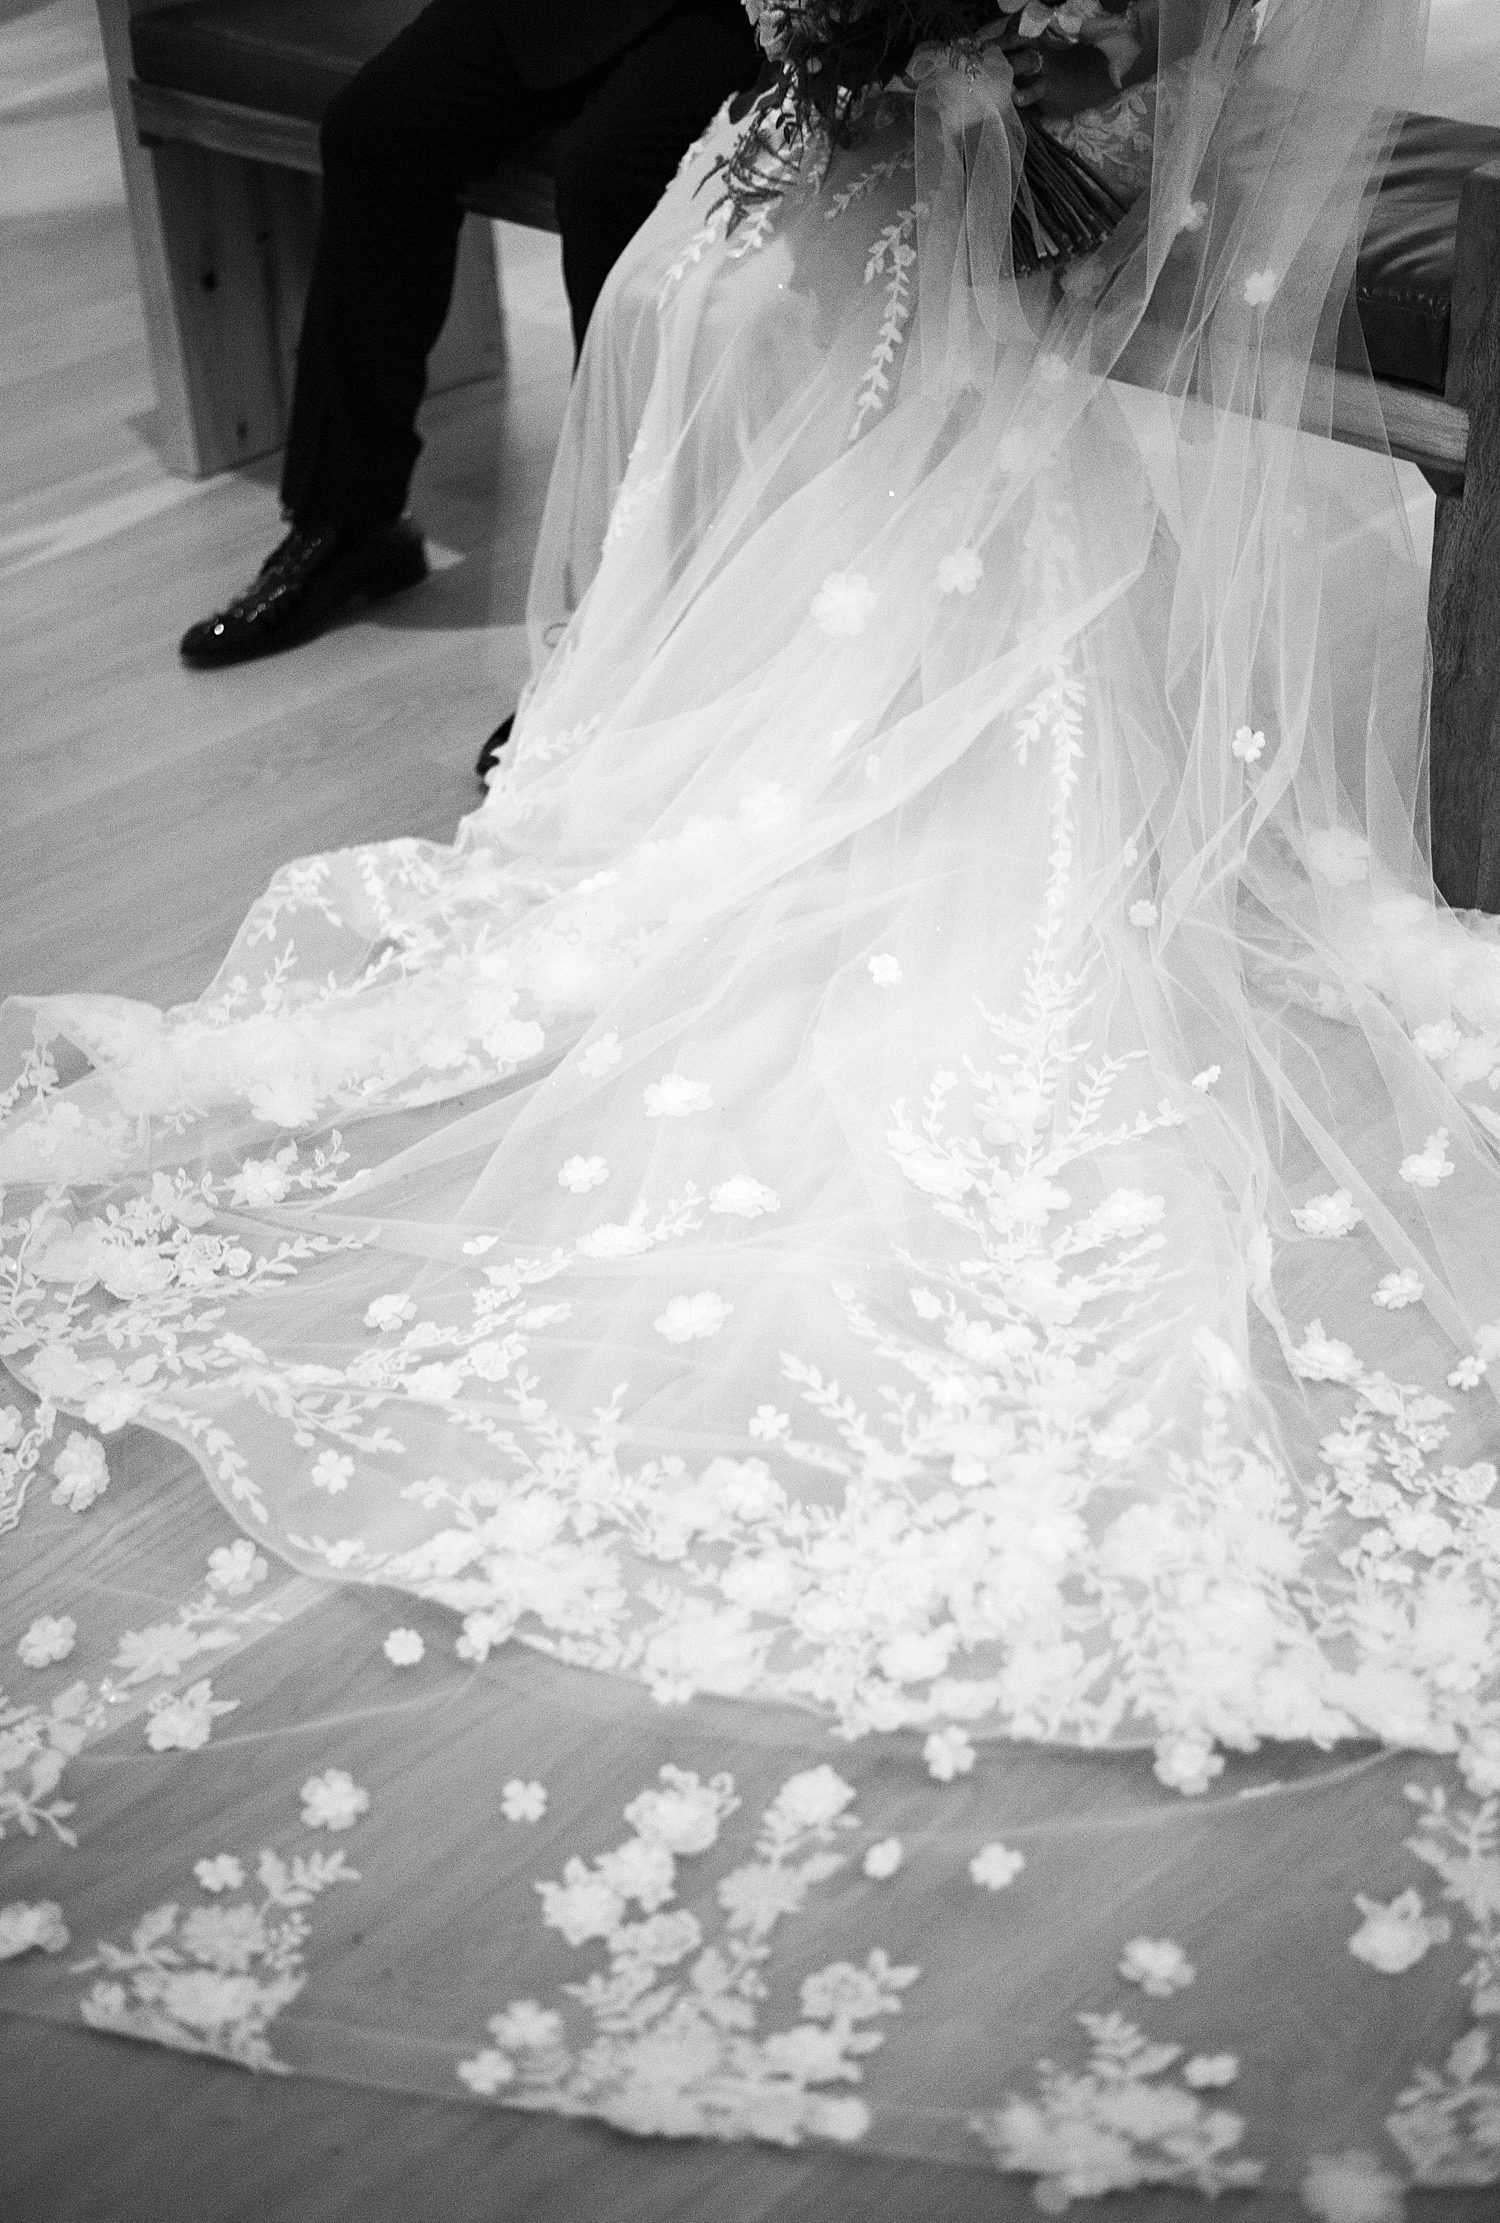 details on bride's veil for FL wedding day